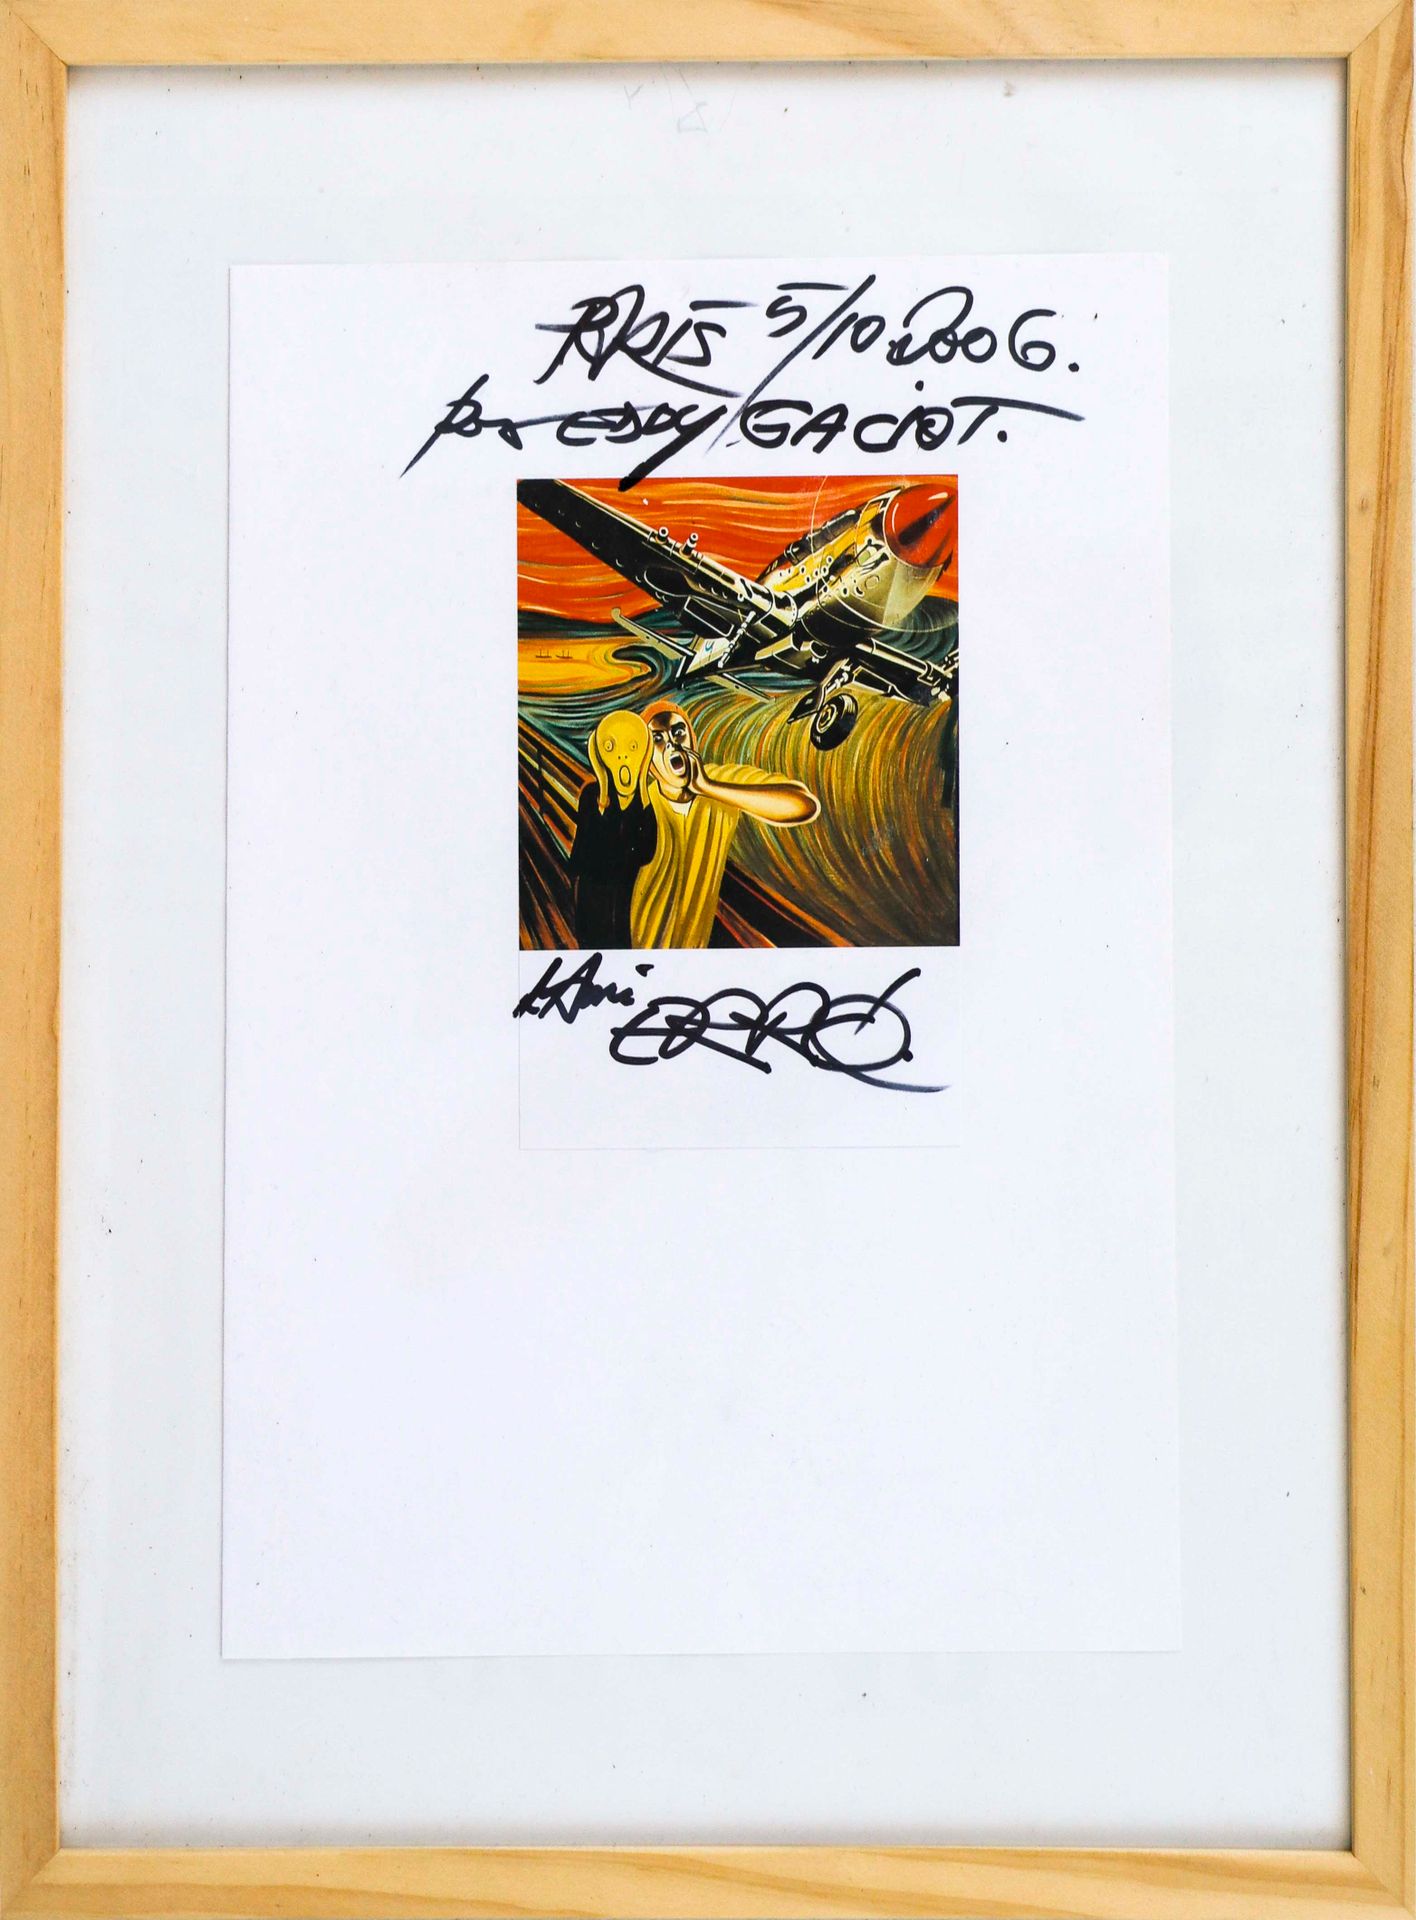 Null Gudmundur ERRO (生于1932年) 《呐喊》 - 2006年 纸上彩色印刷品 底部有签名，顶部有日期和献词 30.5 x 21 cm